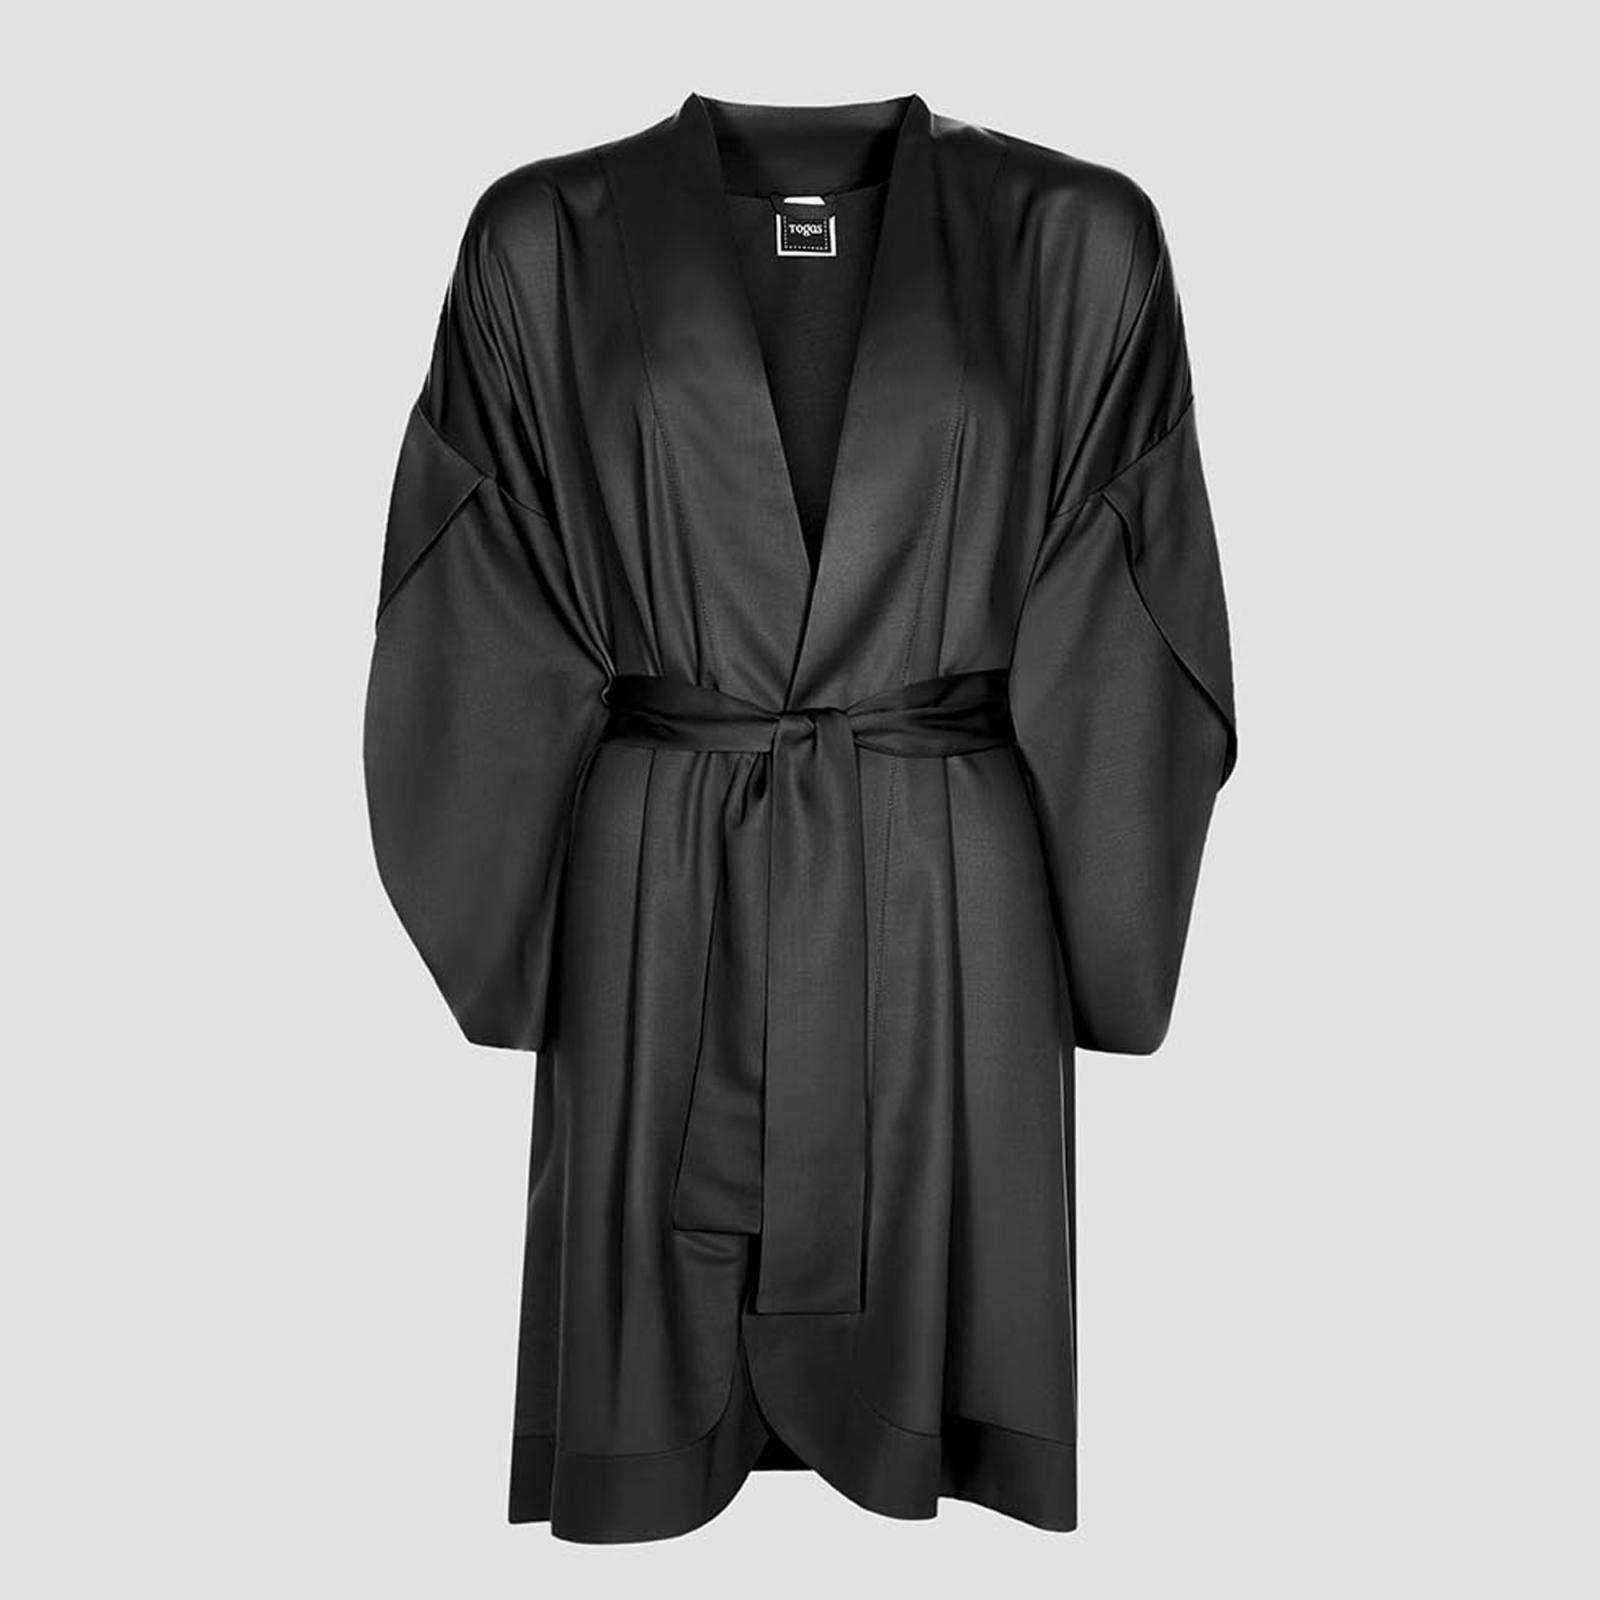 Халат-кимоно короткое Togas Наоми чёрное XL (50) халат кимоно togas наоми зеленый xl 50